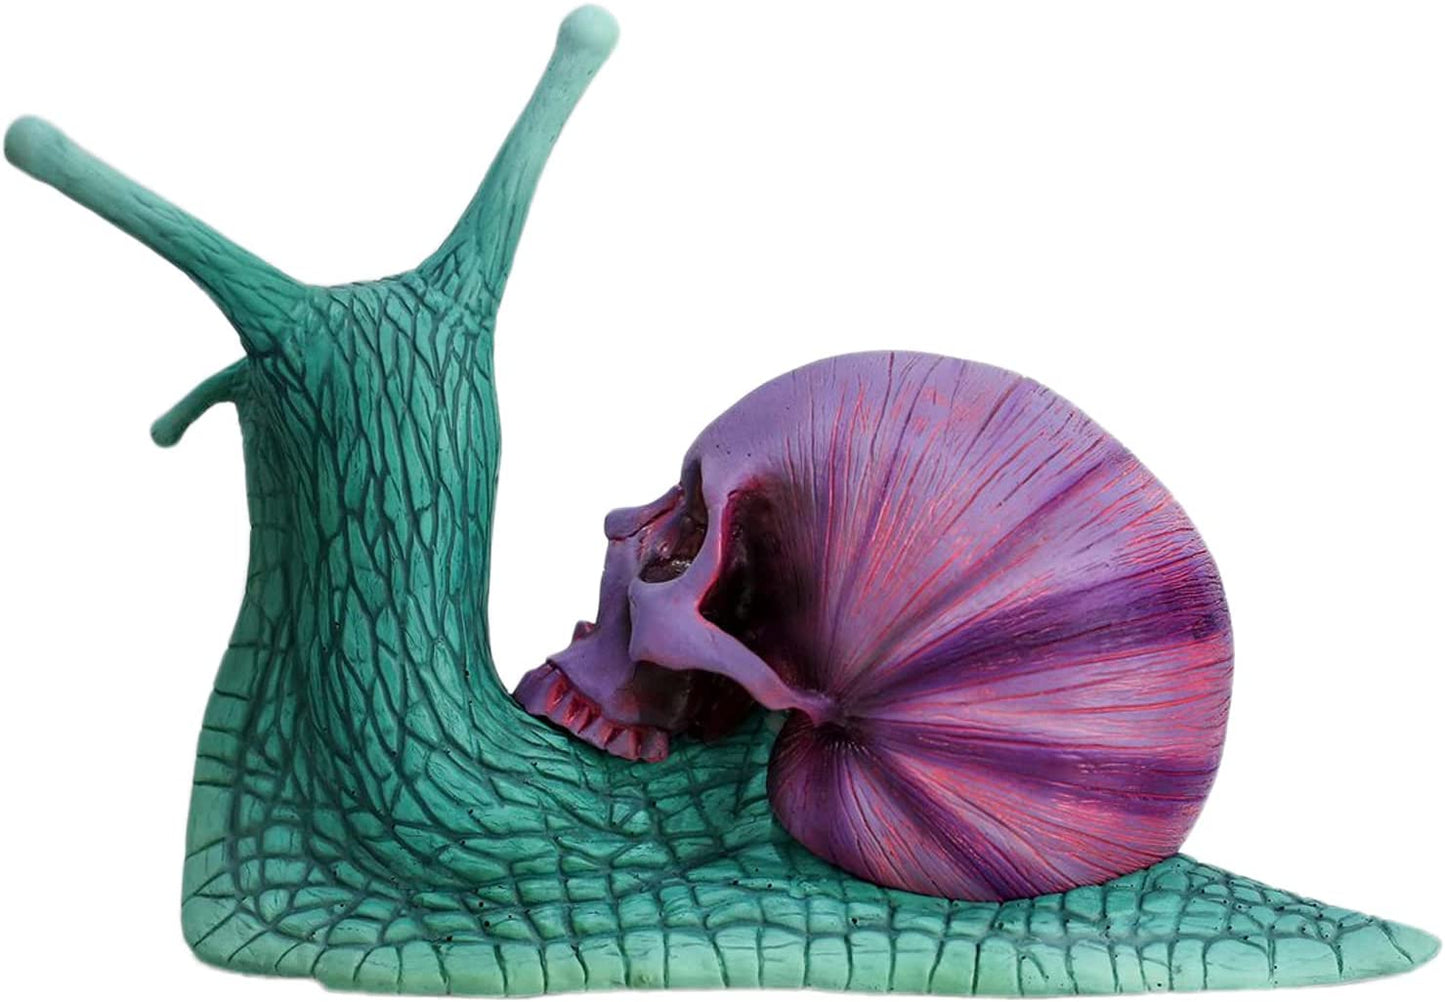 SIXIAO Snail Skull Sculpture,Snail Skull Sculpture Gothic Decoration,Halloween Decoration Snail Statue Terrace Snail Doll Crafts for Home Garden Decor(Purple),GF-695417